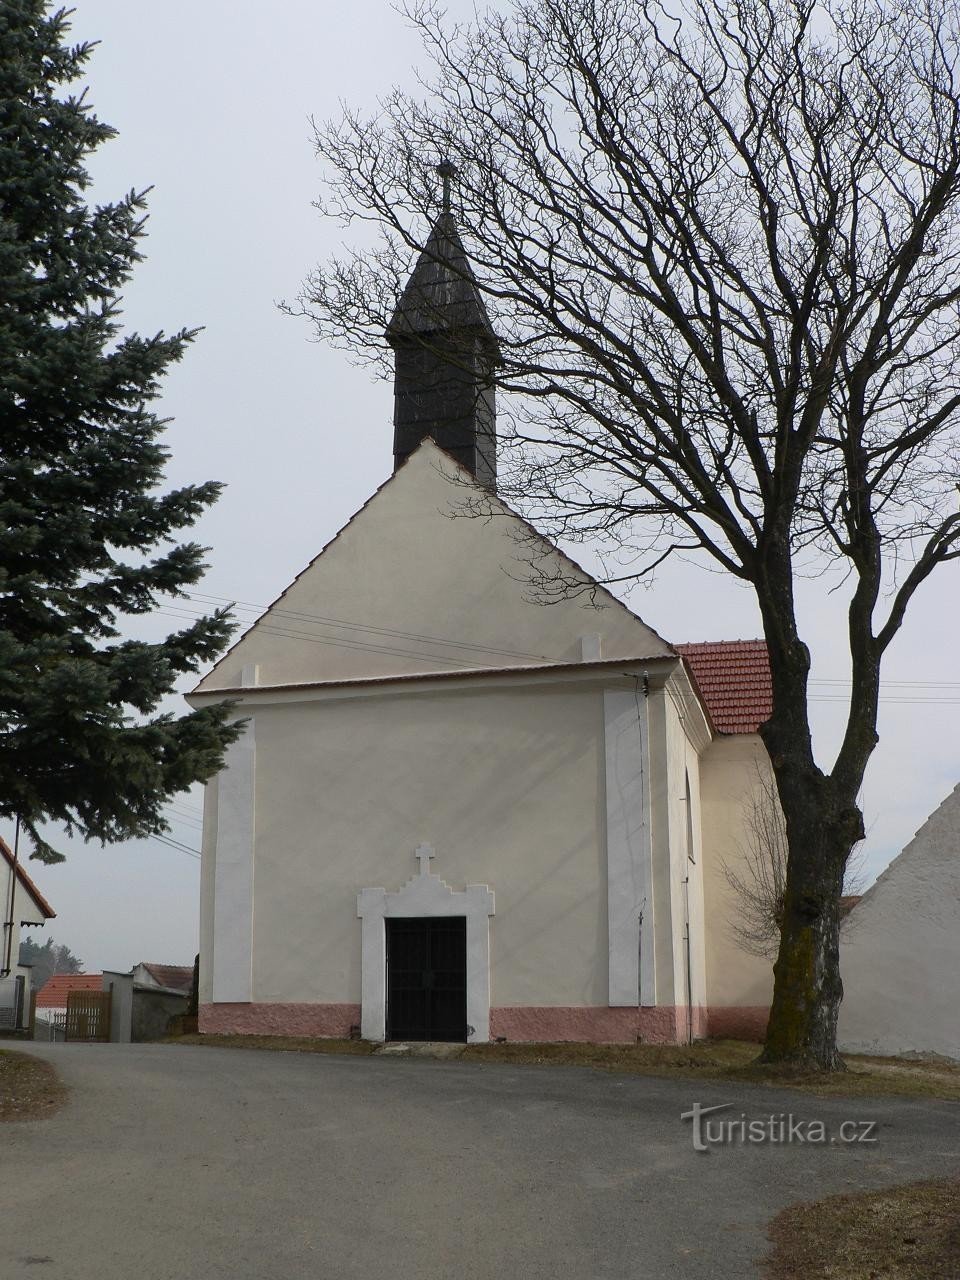 Kladruby, capela de pelerinaj a Sfintei Treimi